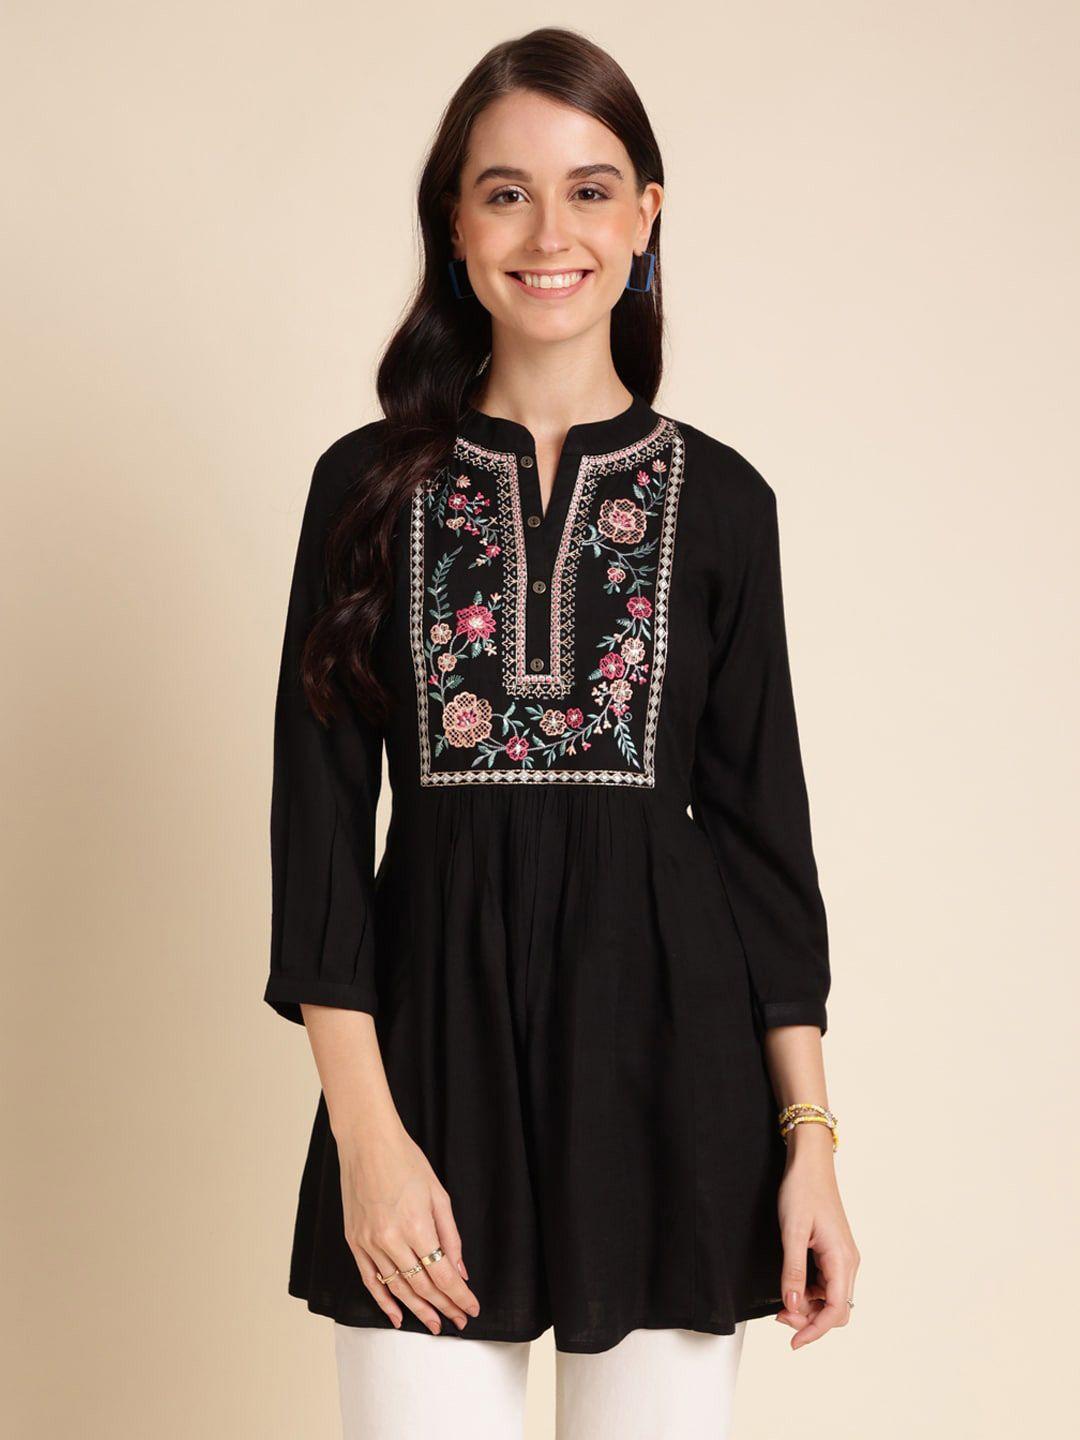 sangria-black-floral-embroidered-a-line-top